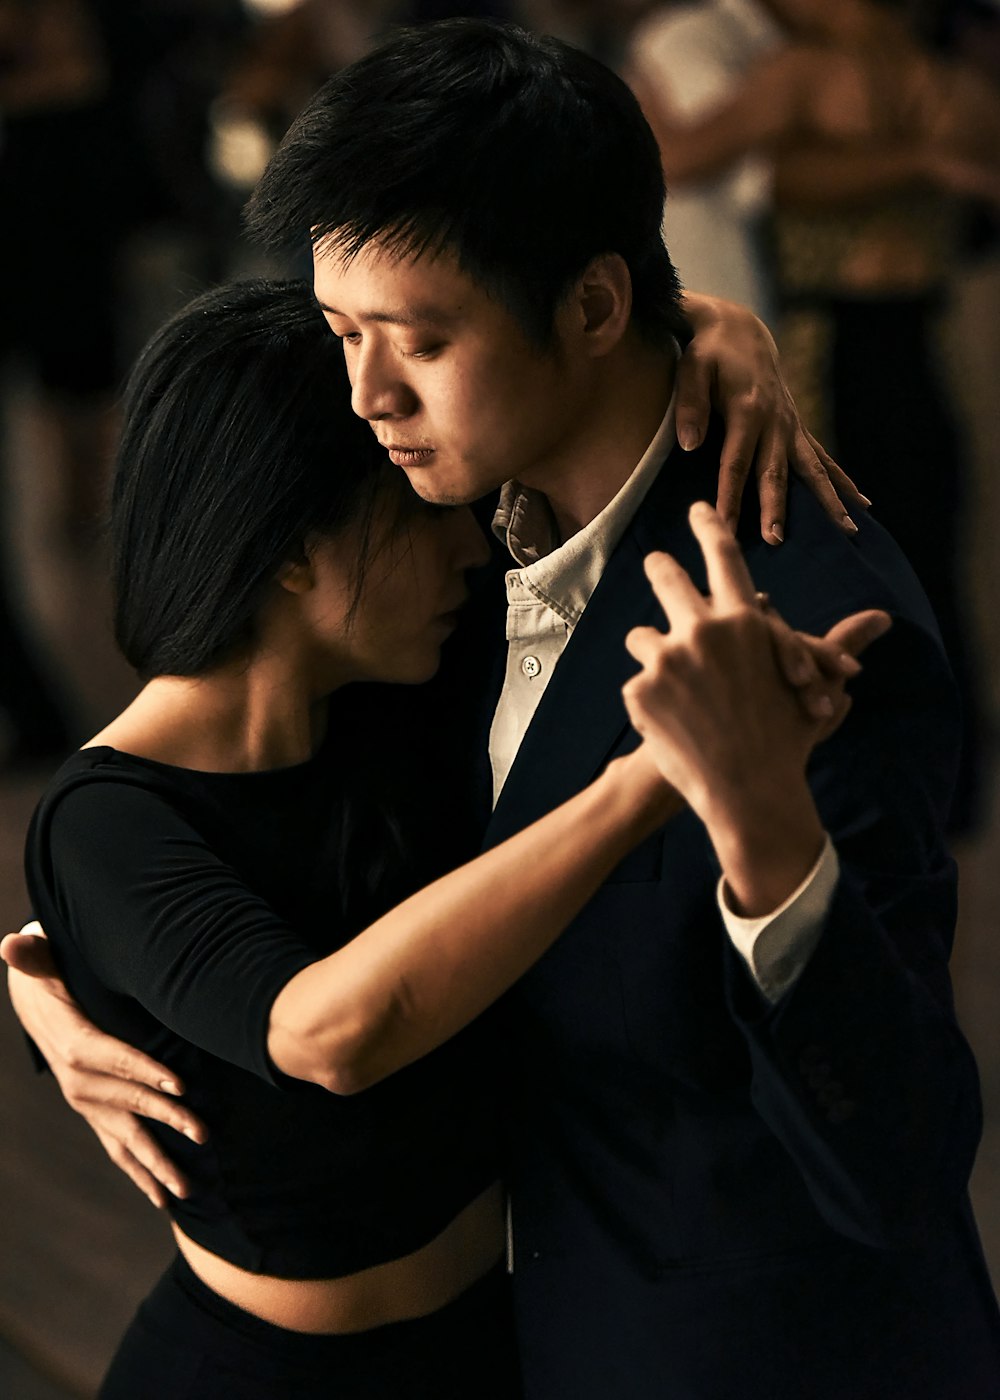 man in black suit kissing woman in black dress